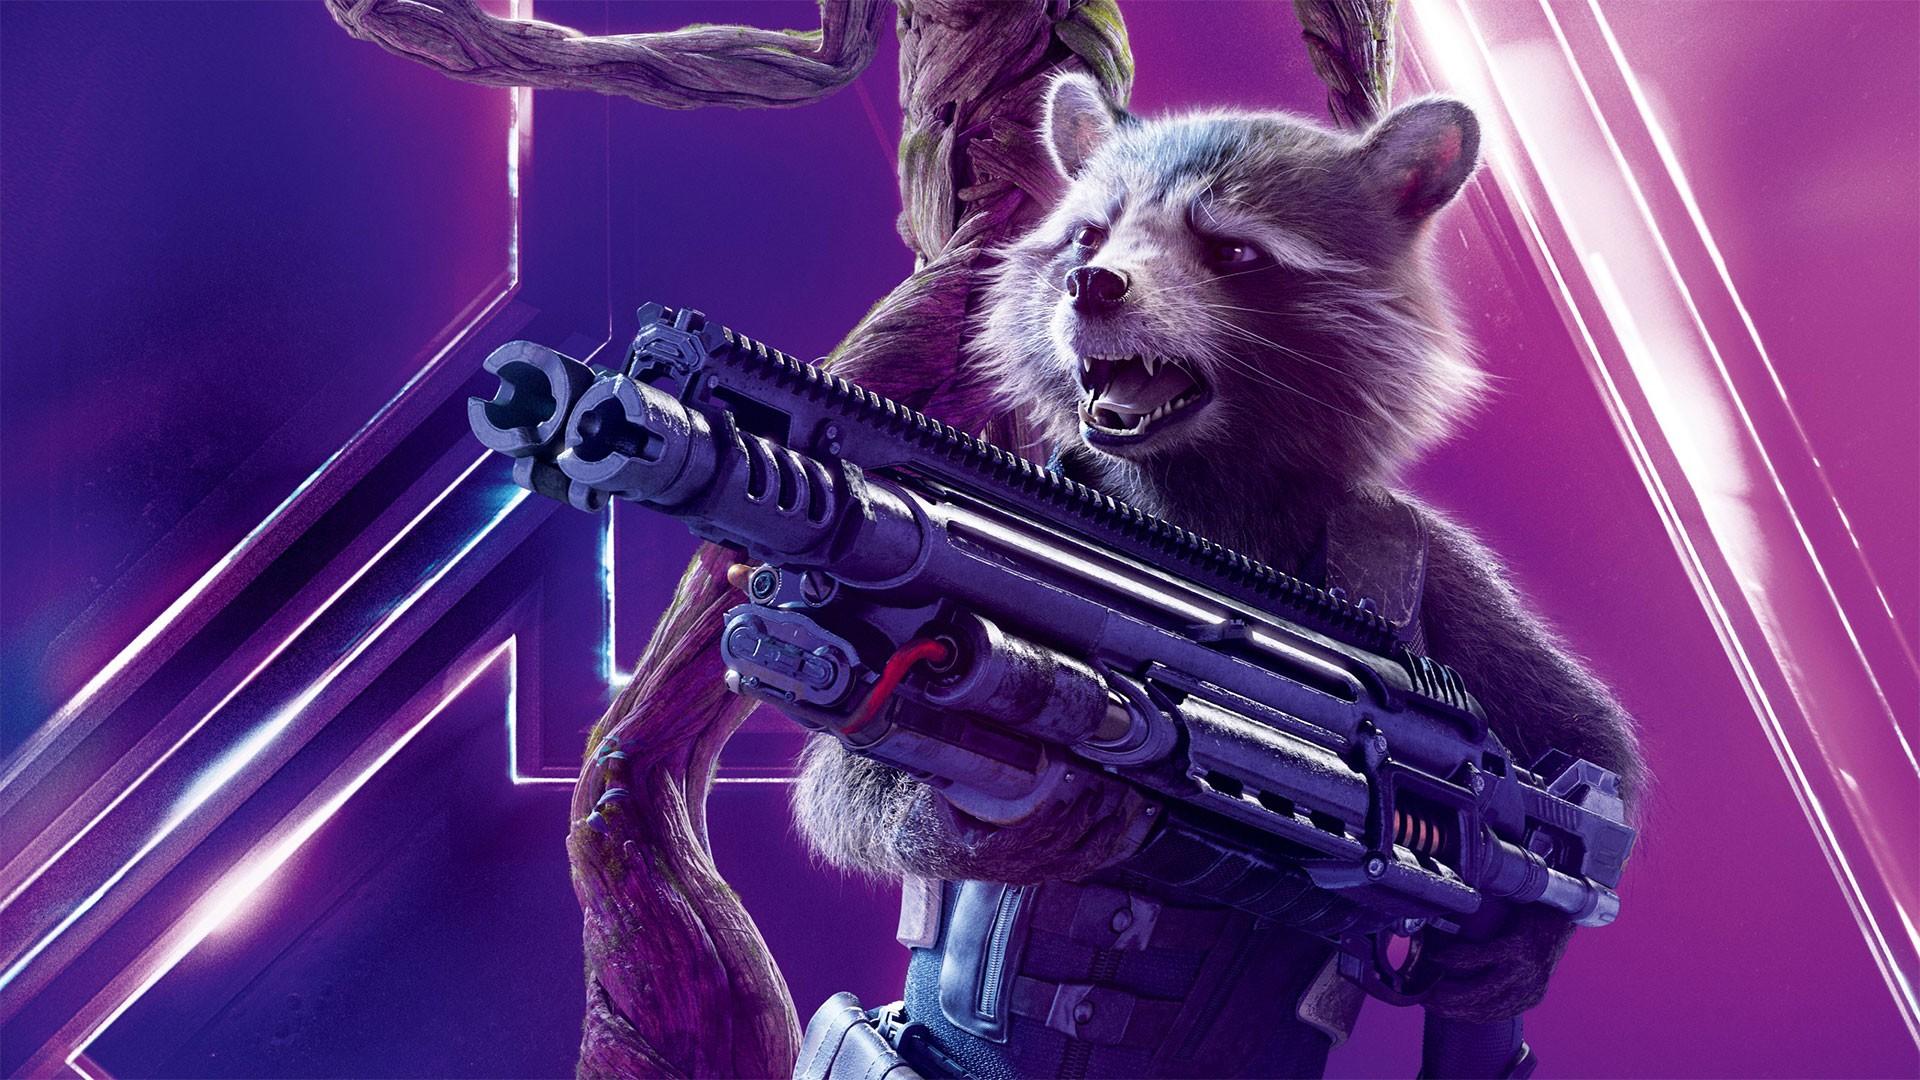 Rocket Raccoon Avengers Endgame Wallpaper HD Movie Poster